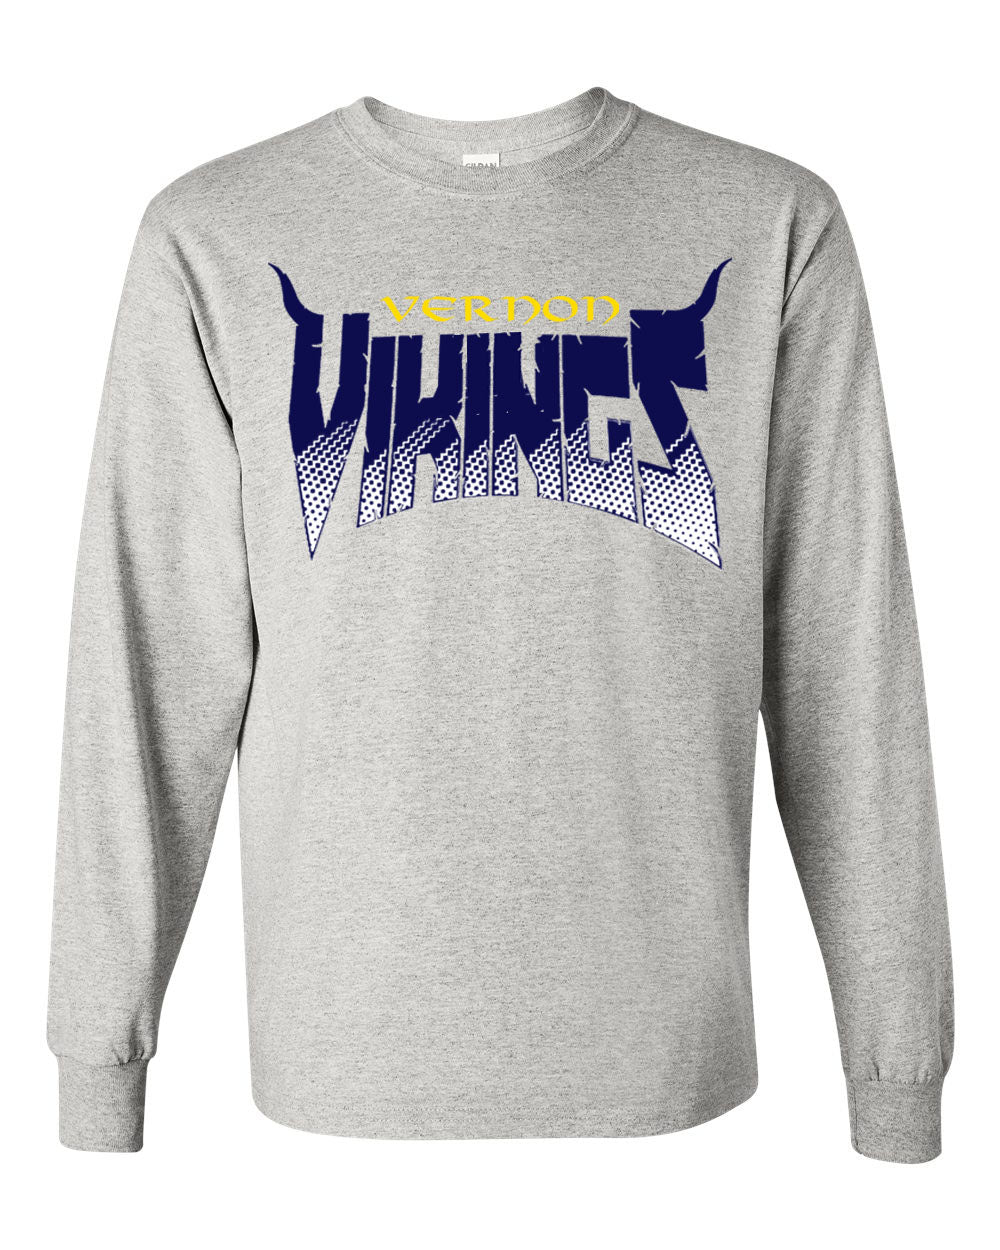 VTHS Design 15 Long Sleeve Shirt